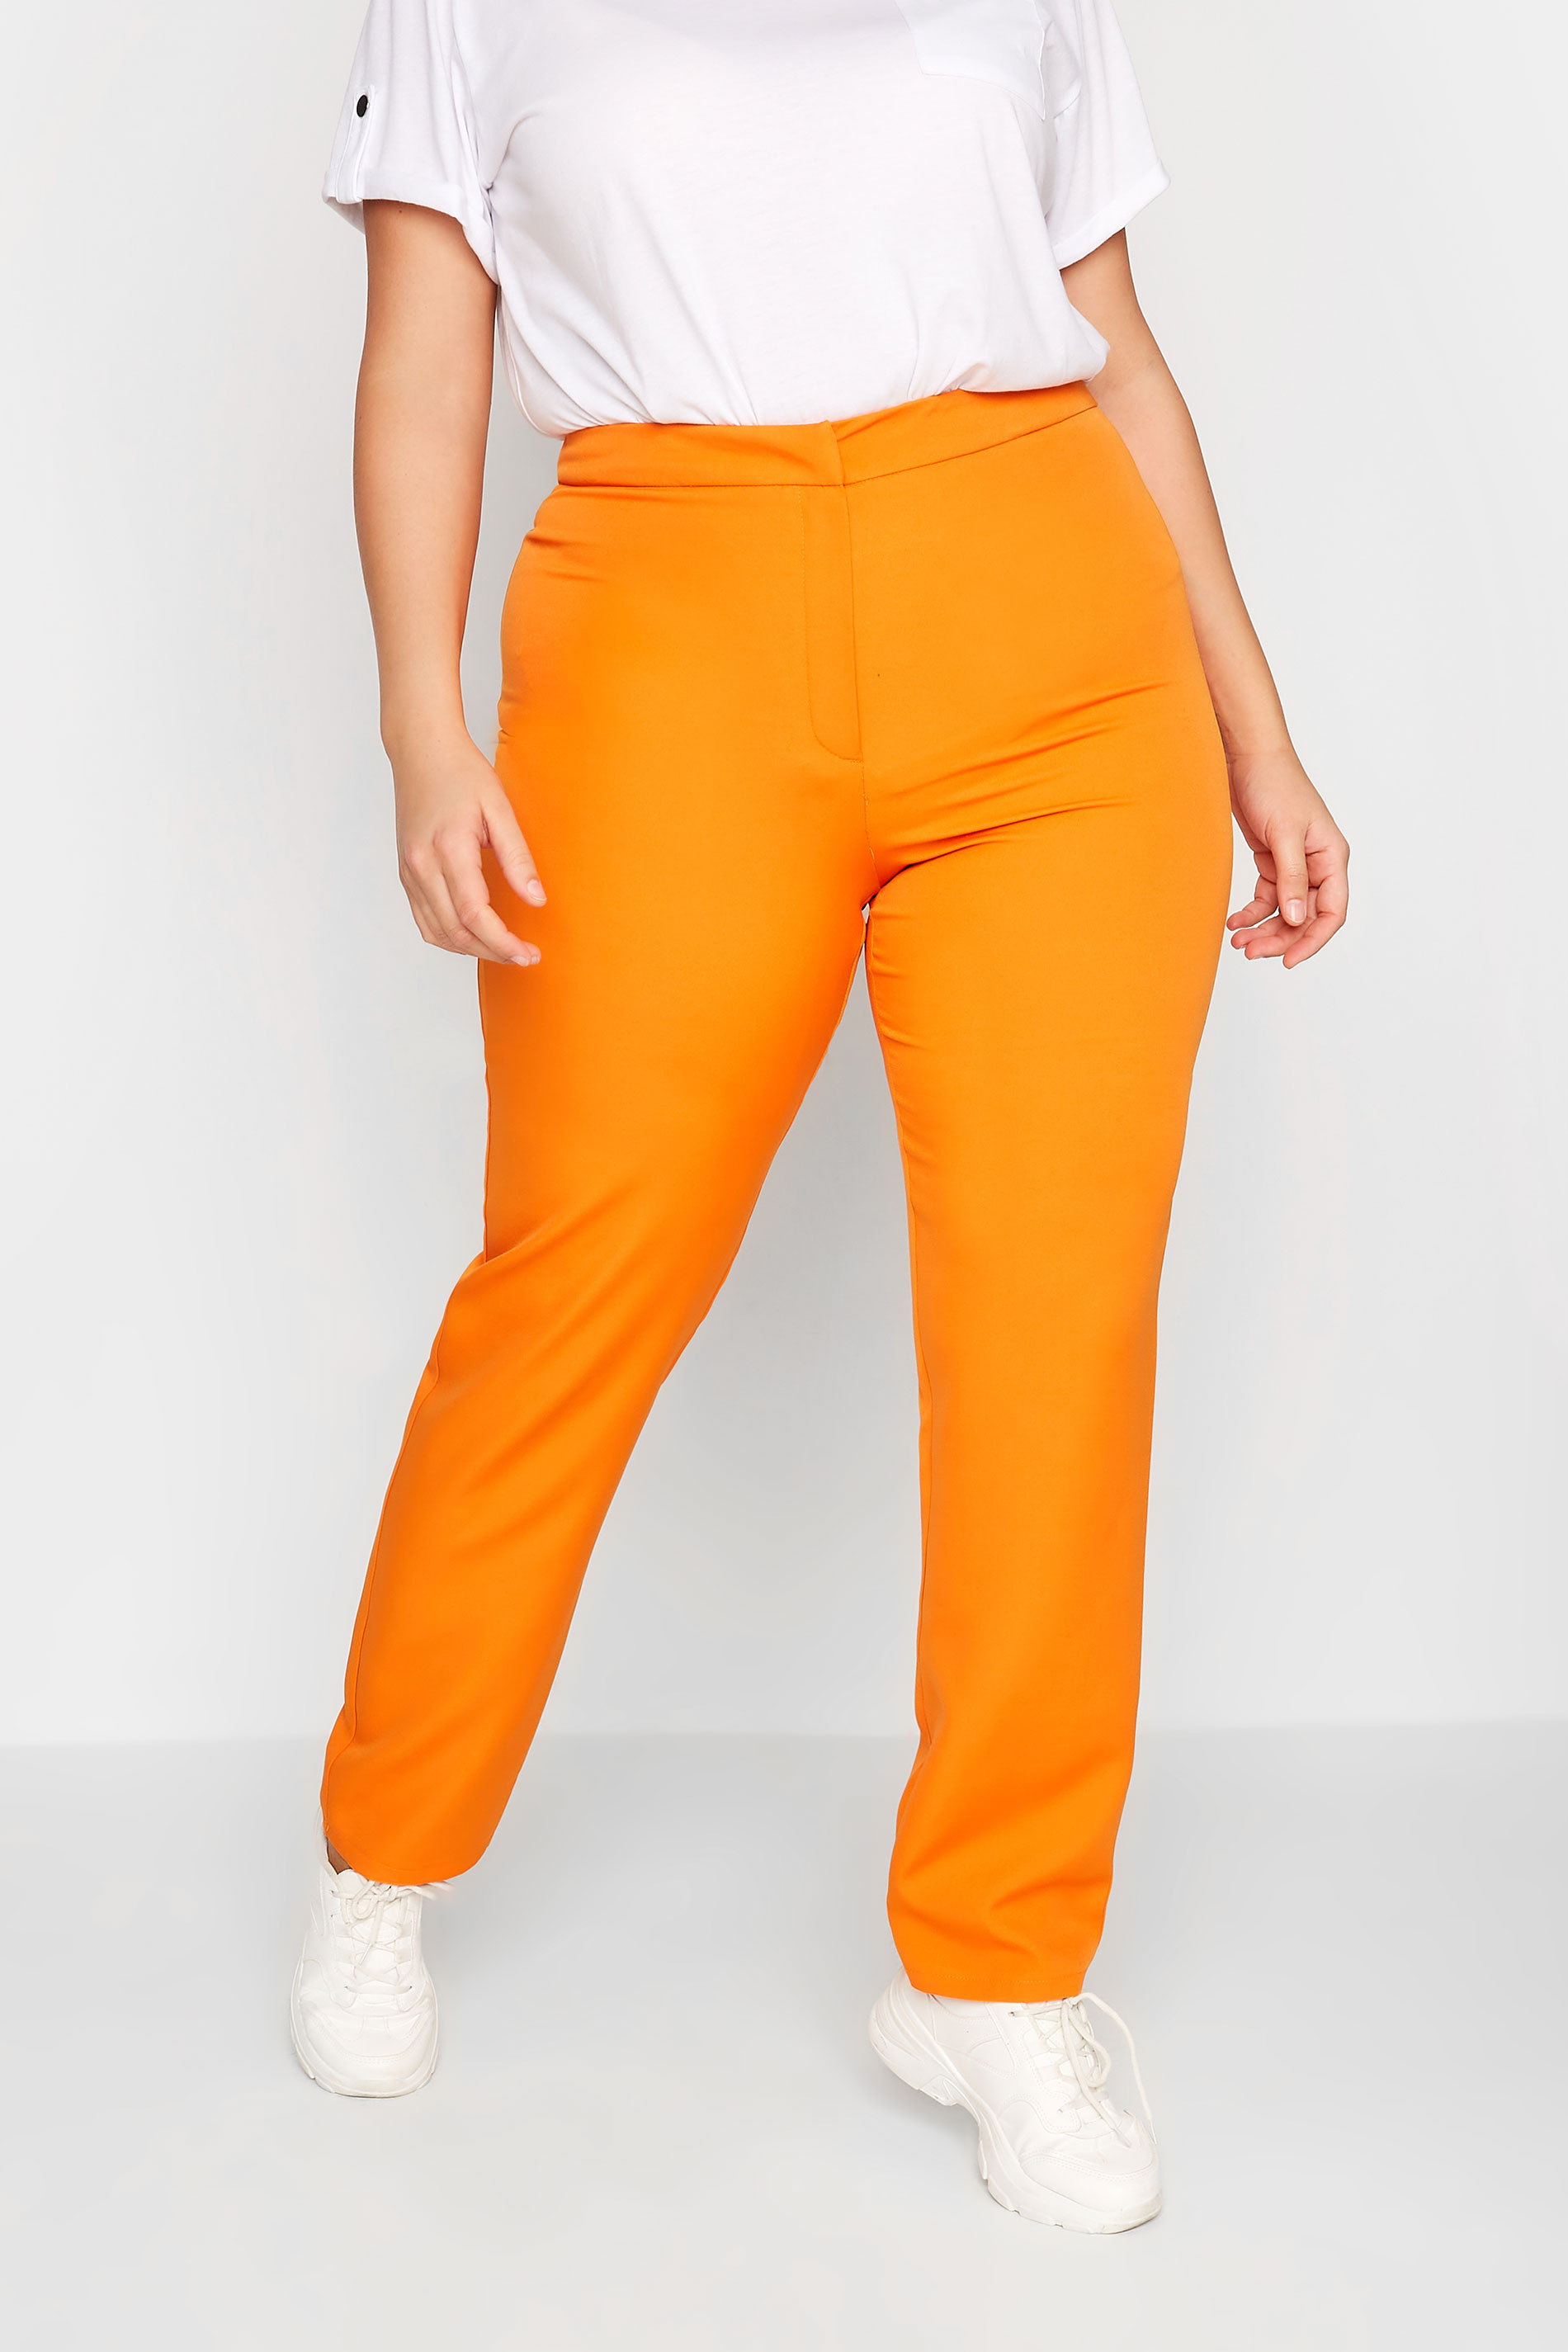 LTS Tall Women's Orange Slim Leg Trousers | Long Tall Sally 1